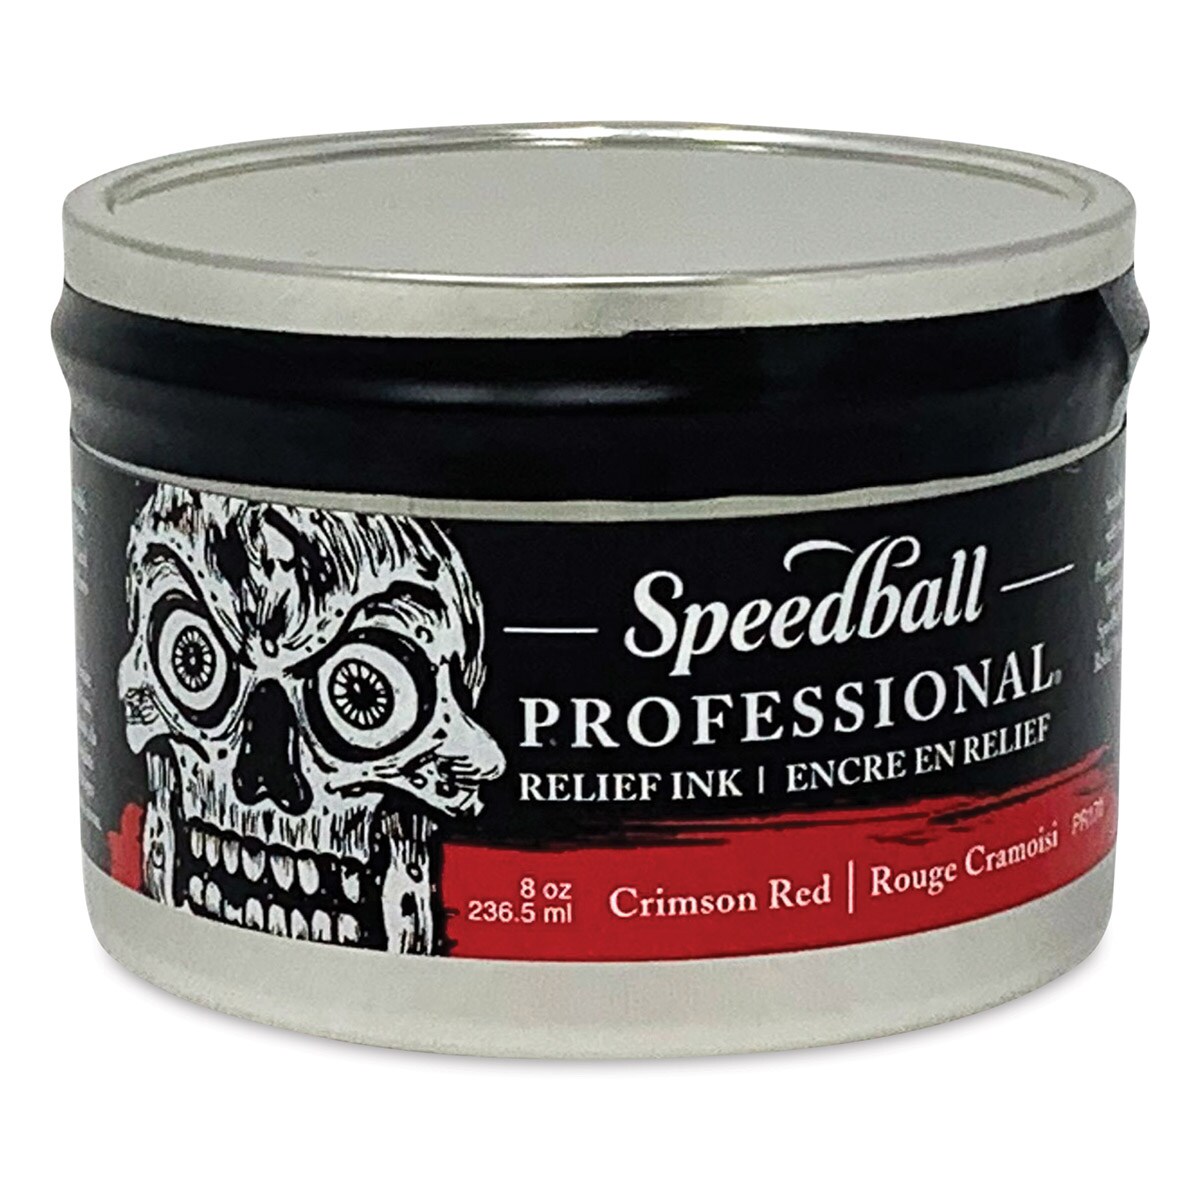 Speedball Professional Relief Ink - Crimson Red, 8 oz